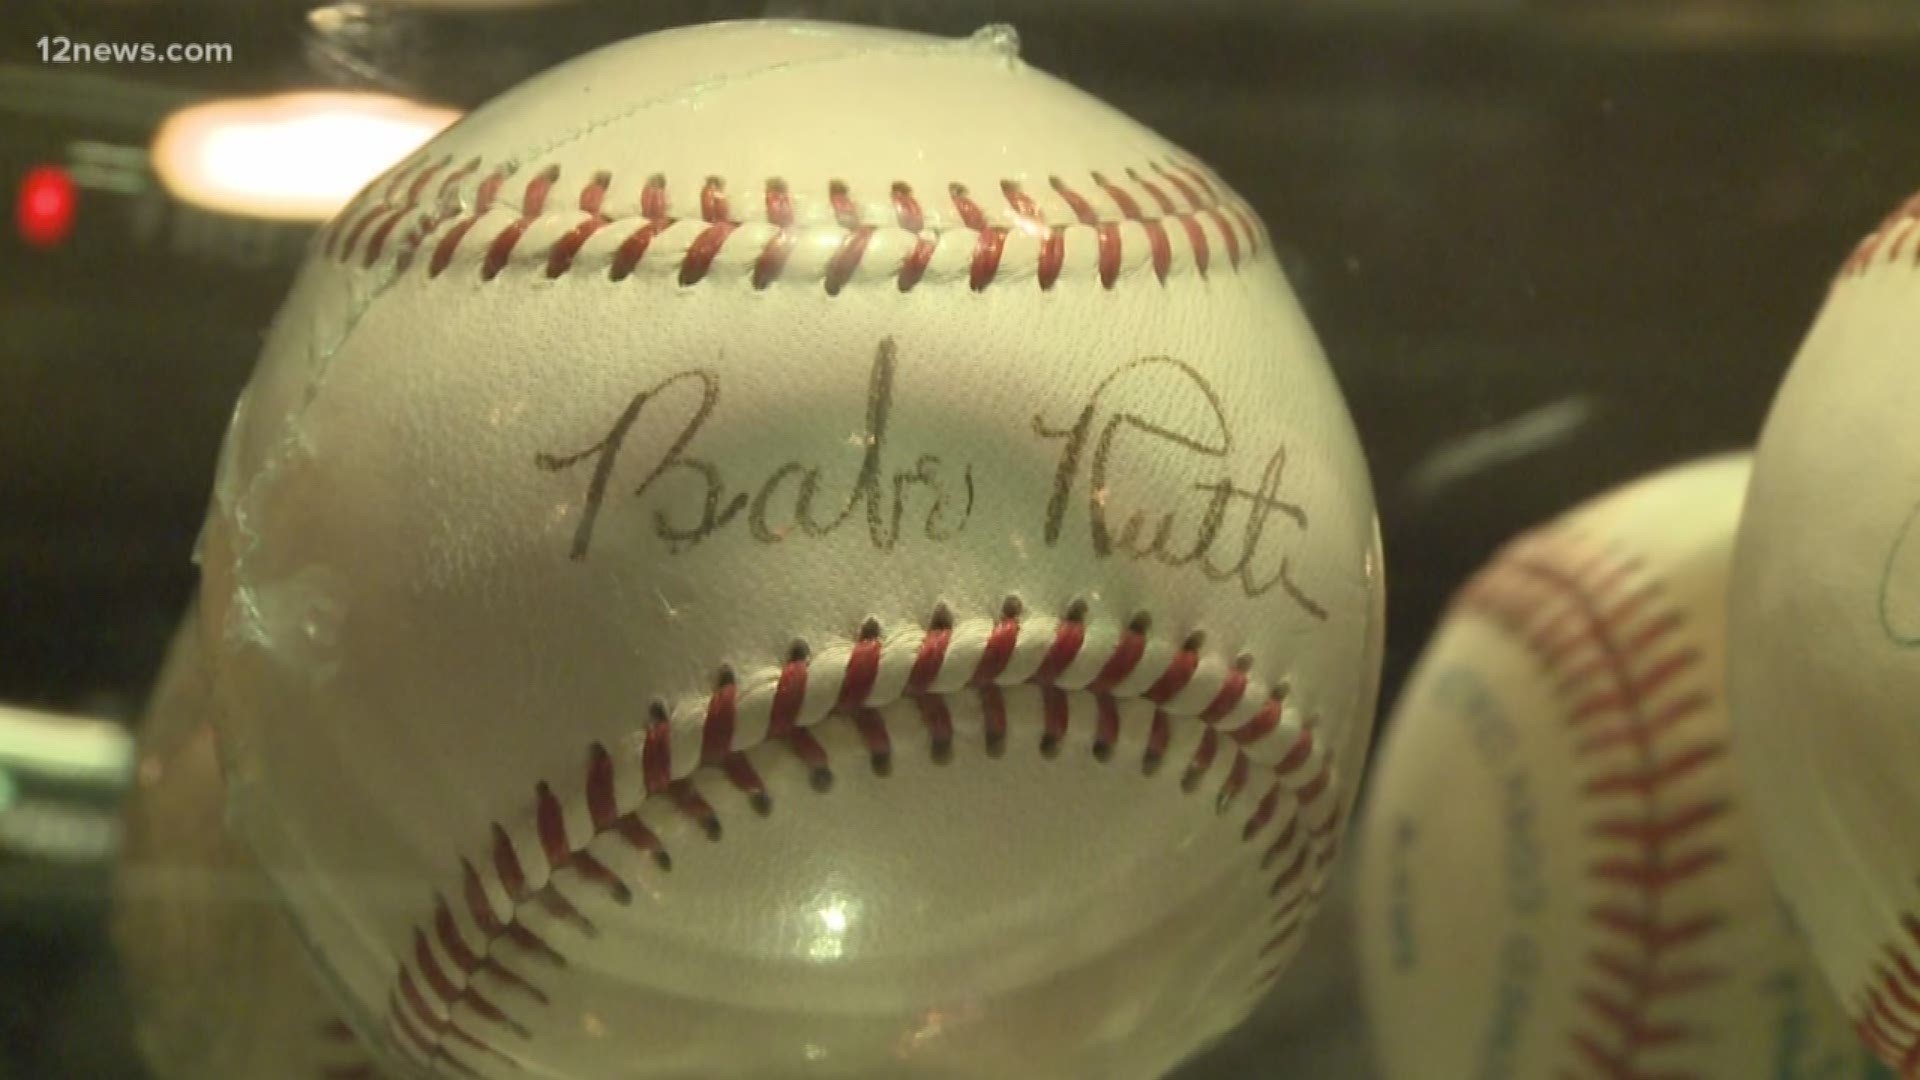 PD: Baseballs signed by Yogi Berra, Willie Mays, Babe Ruth stolen